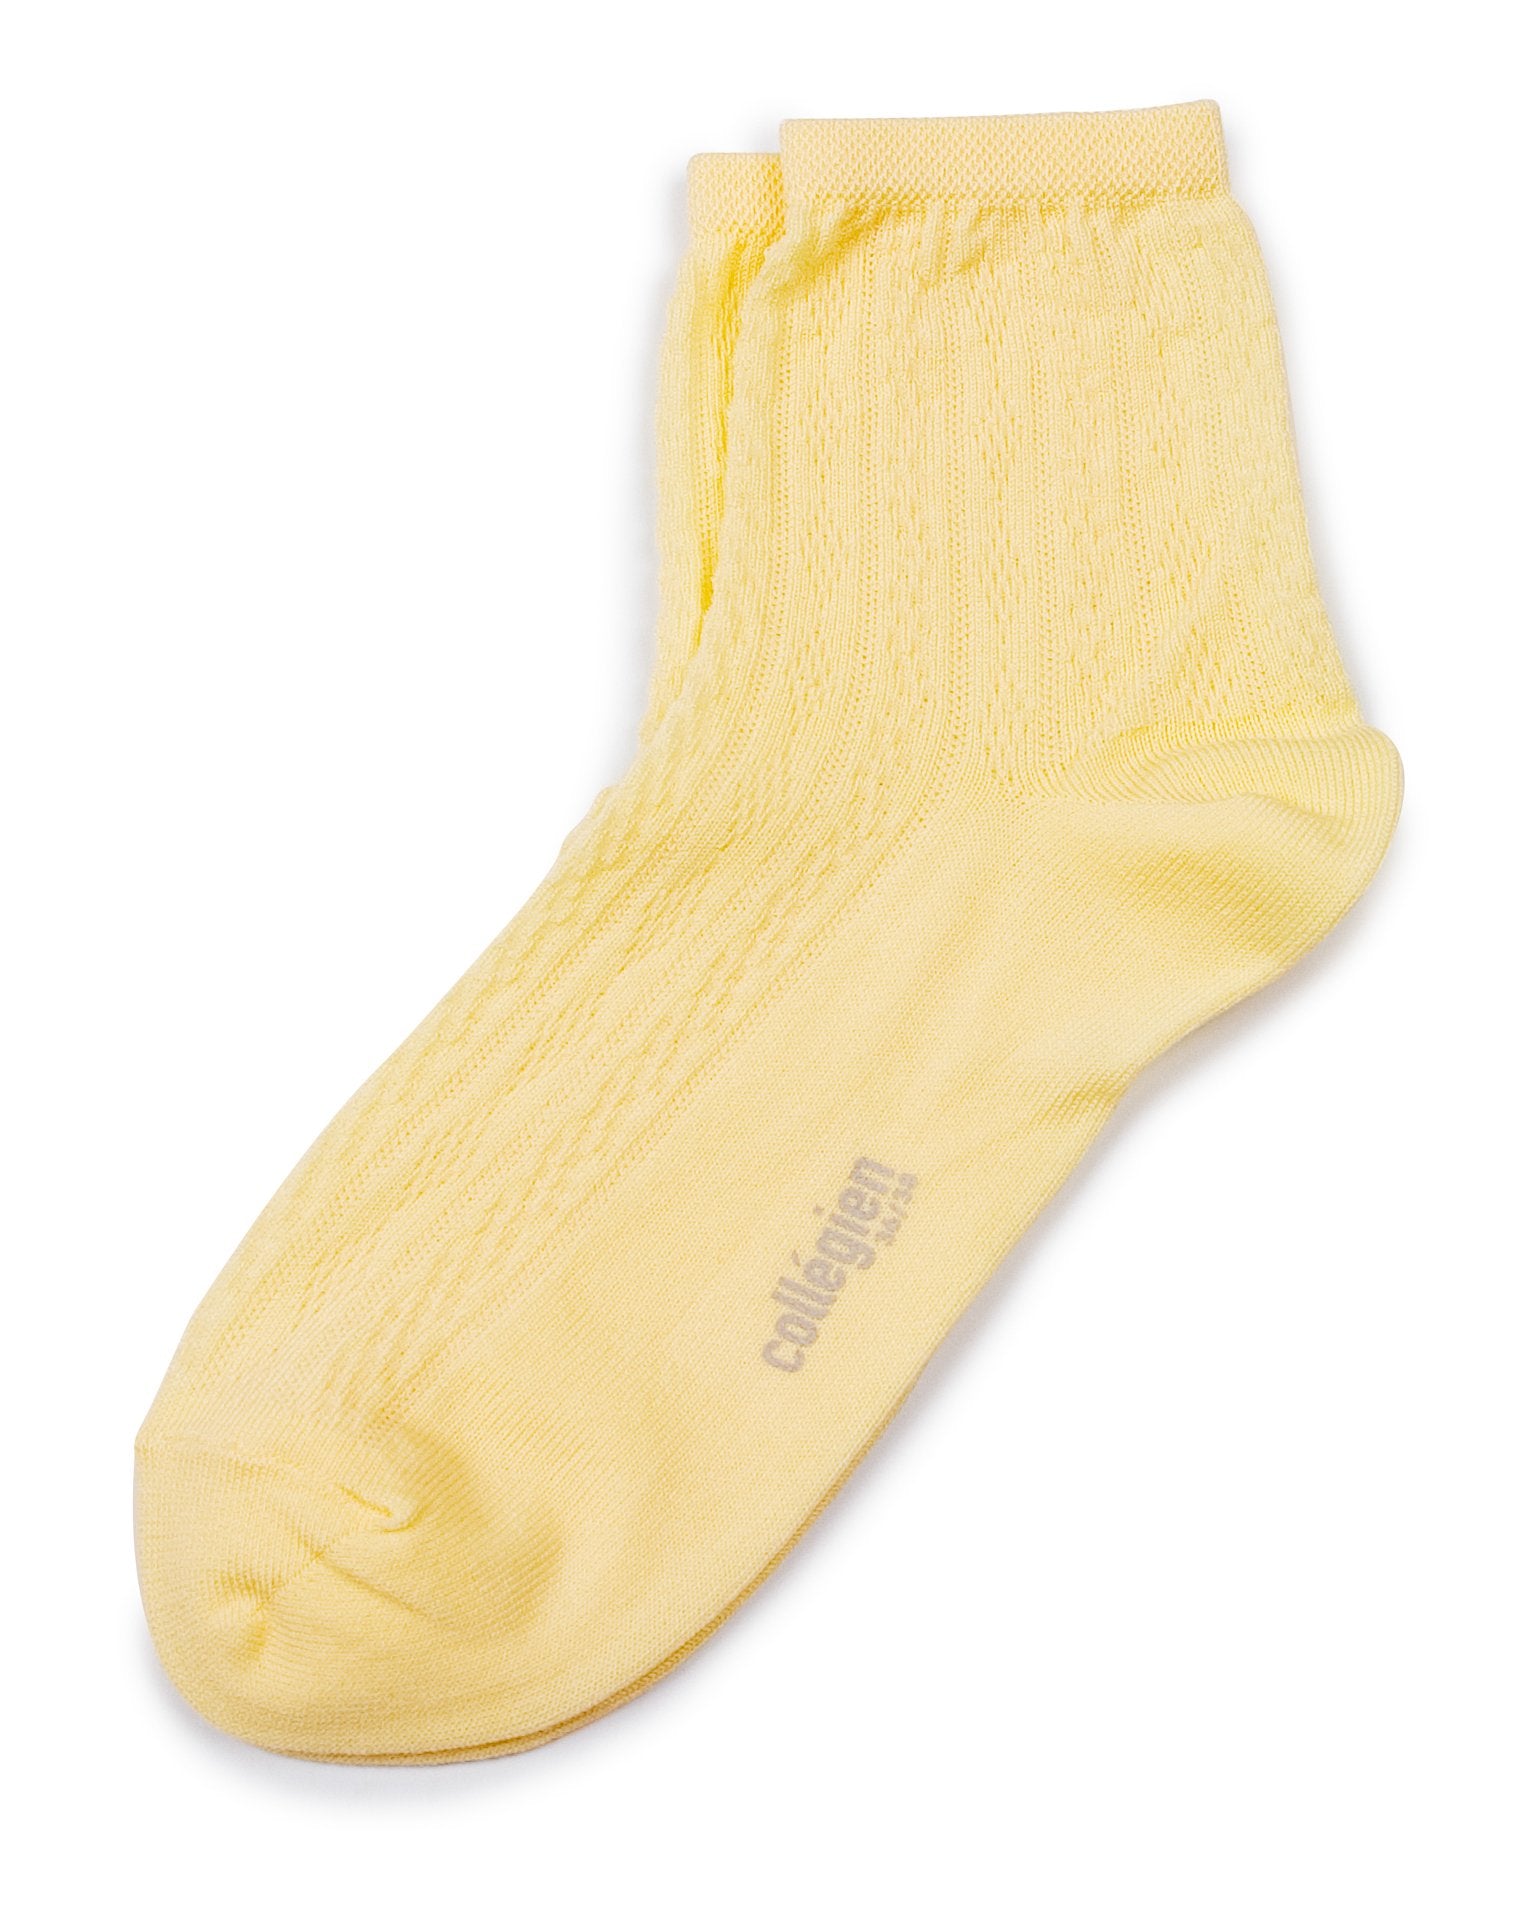 Little collegien accessories pointelle ankle socks in vanille